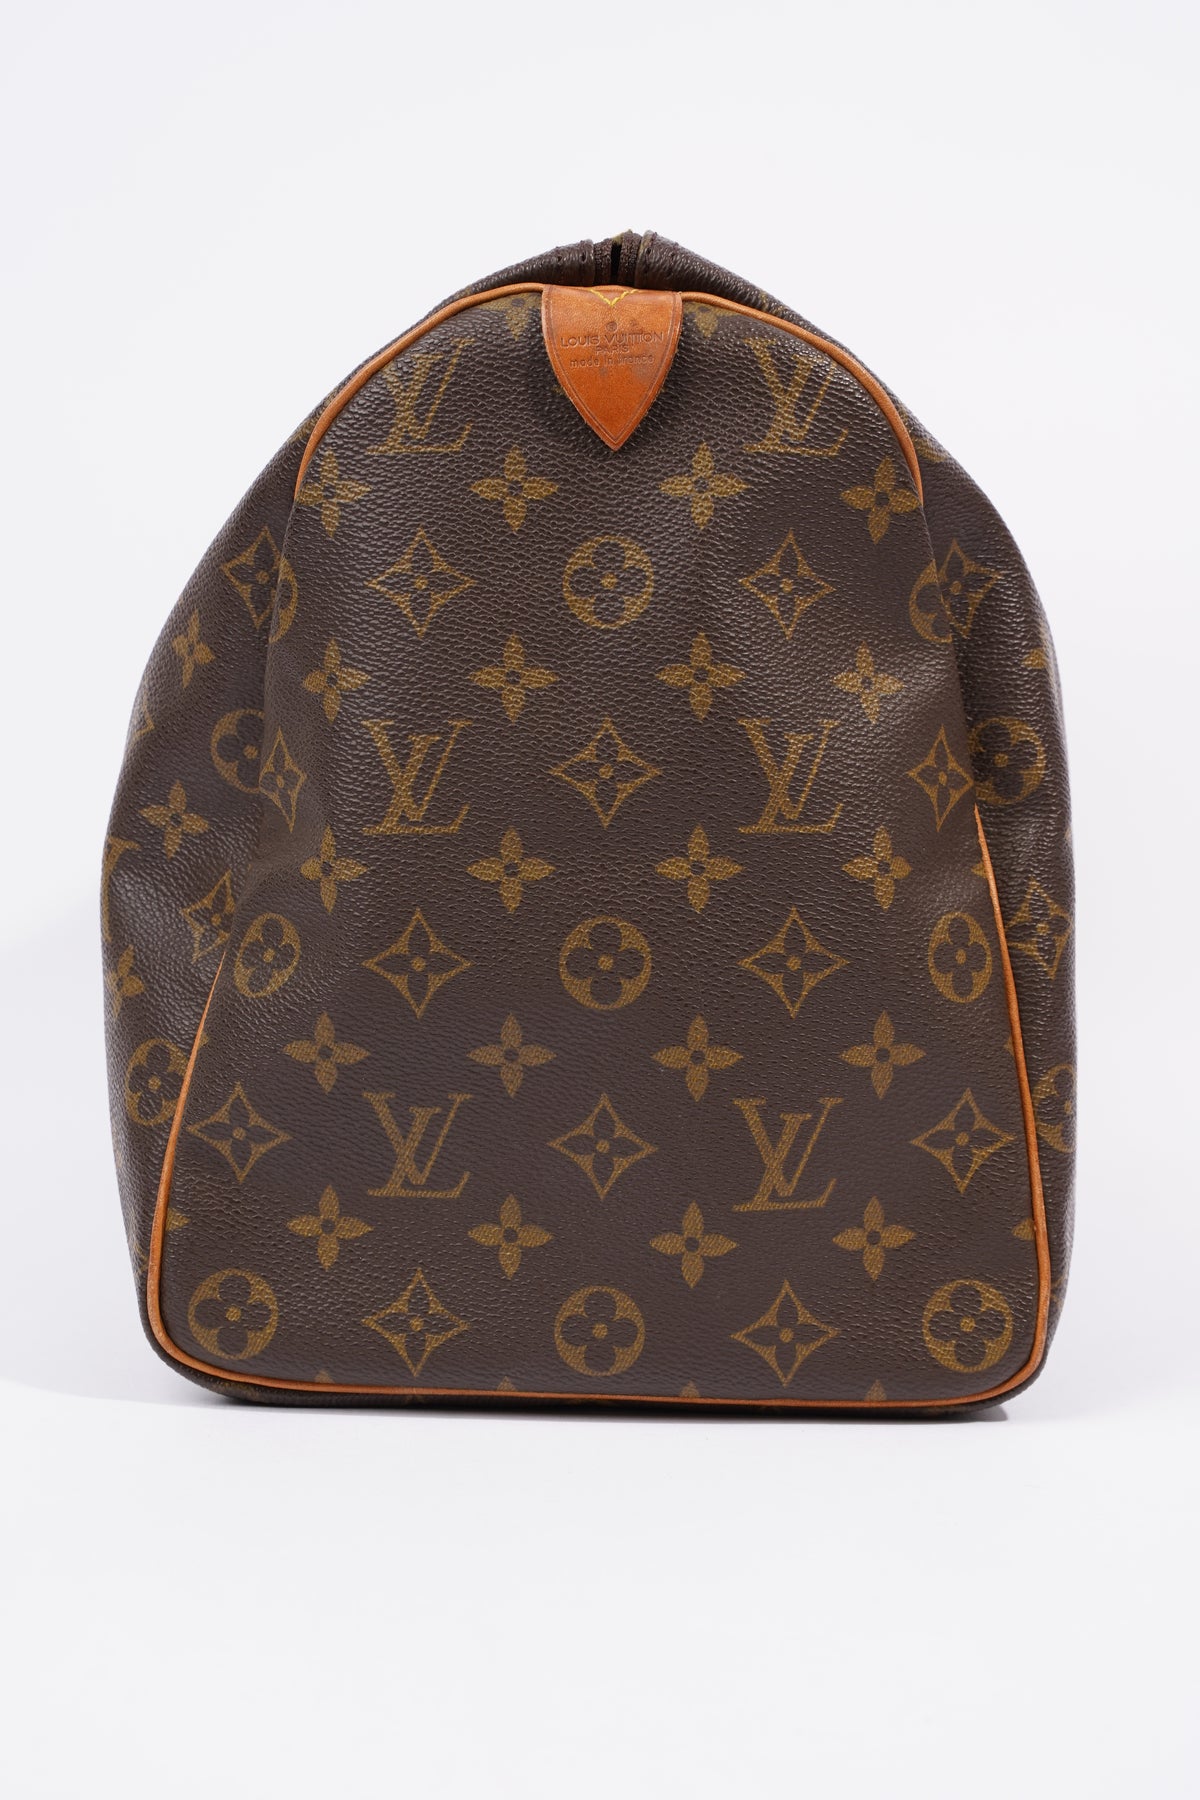 Louis Vuitton Monogram Speedy 40 Handbag, Brown, Coated Canvas